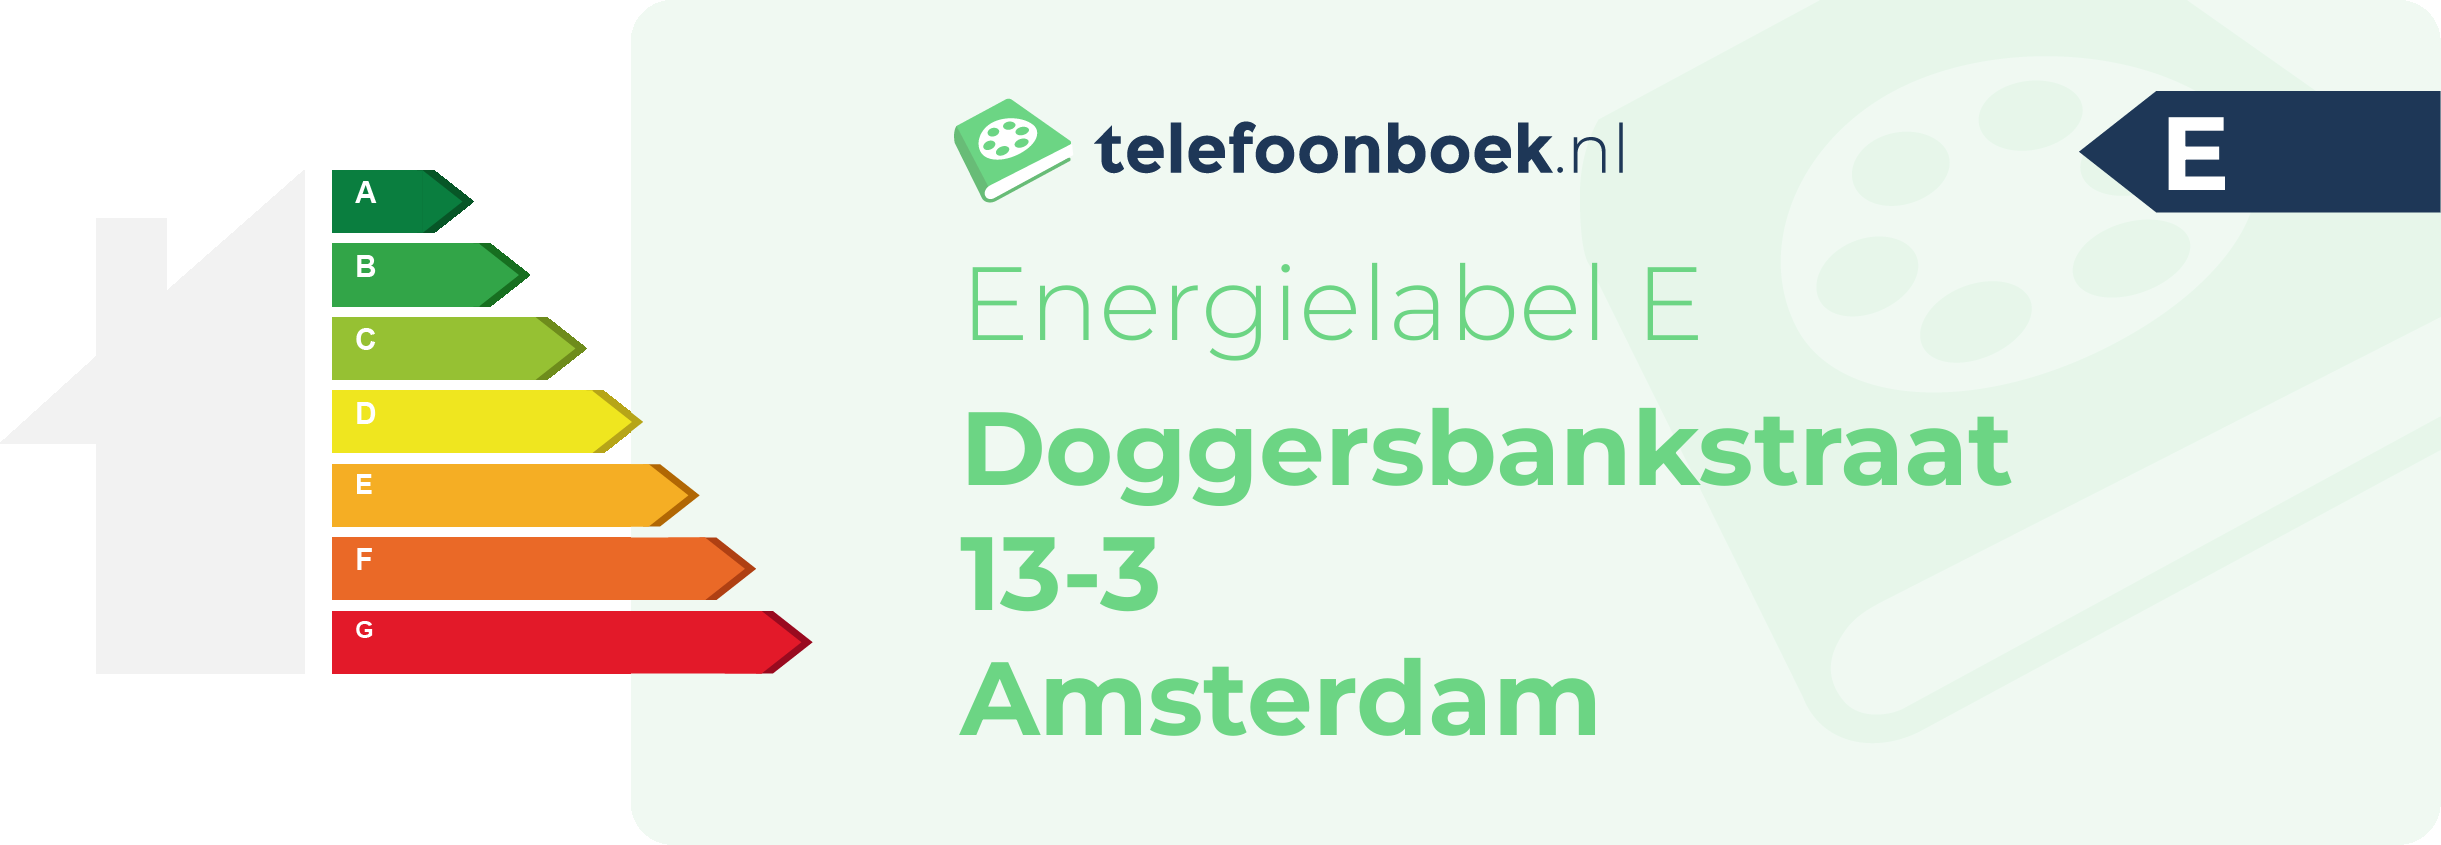 Energielabel Doggersbankstraat 13-3 Amsterdam